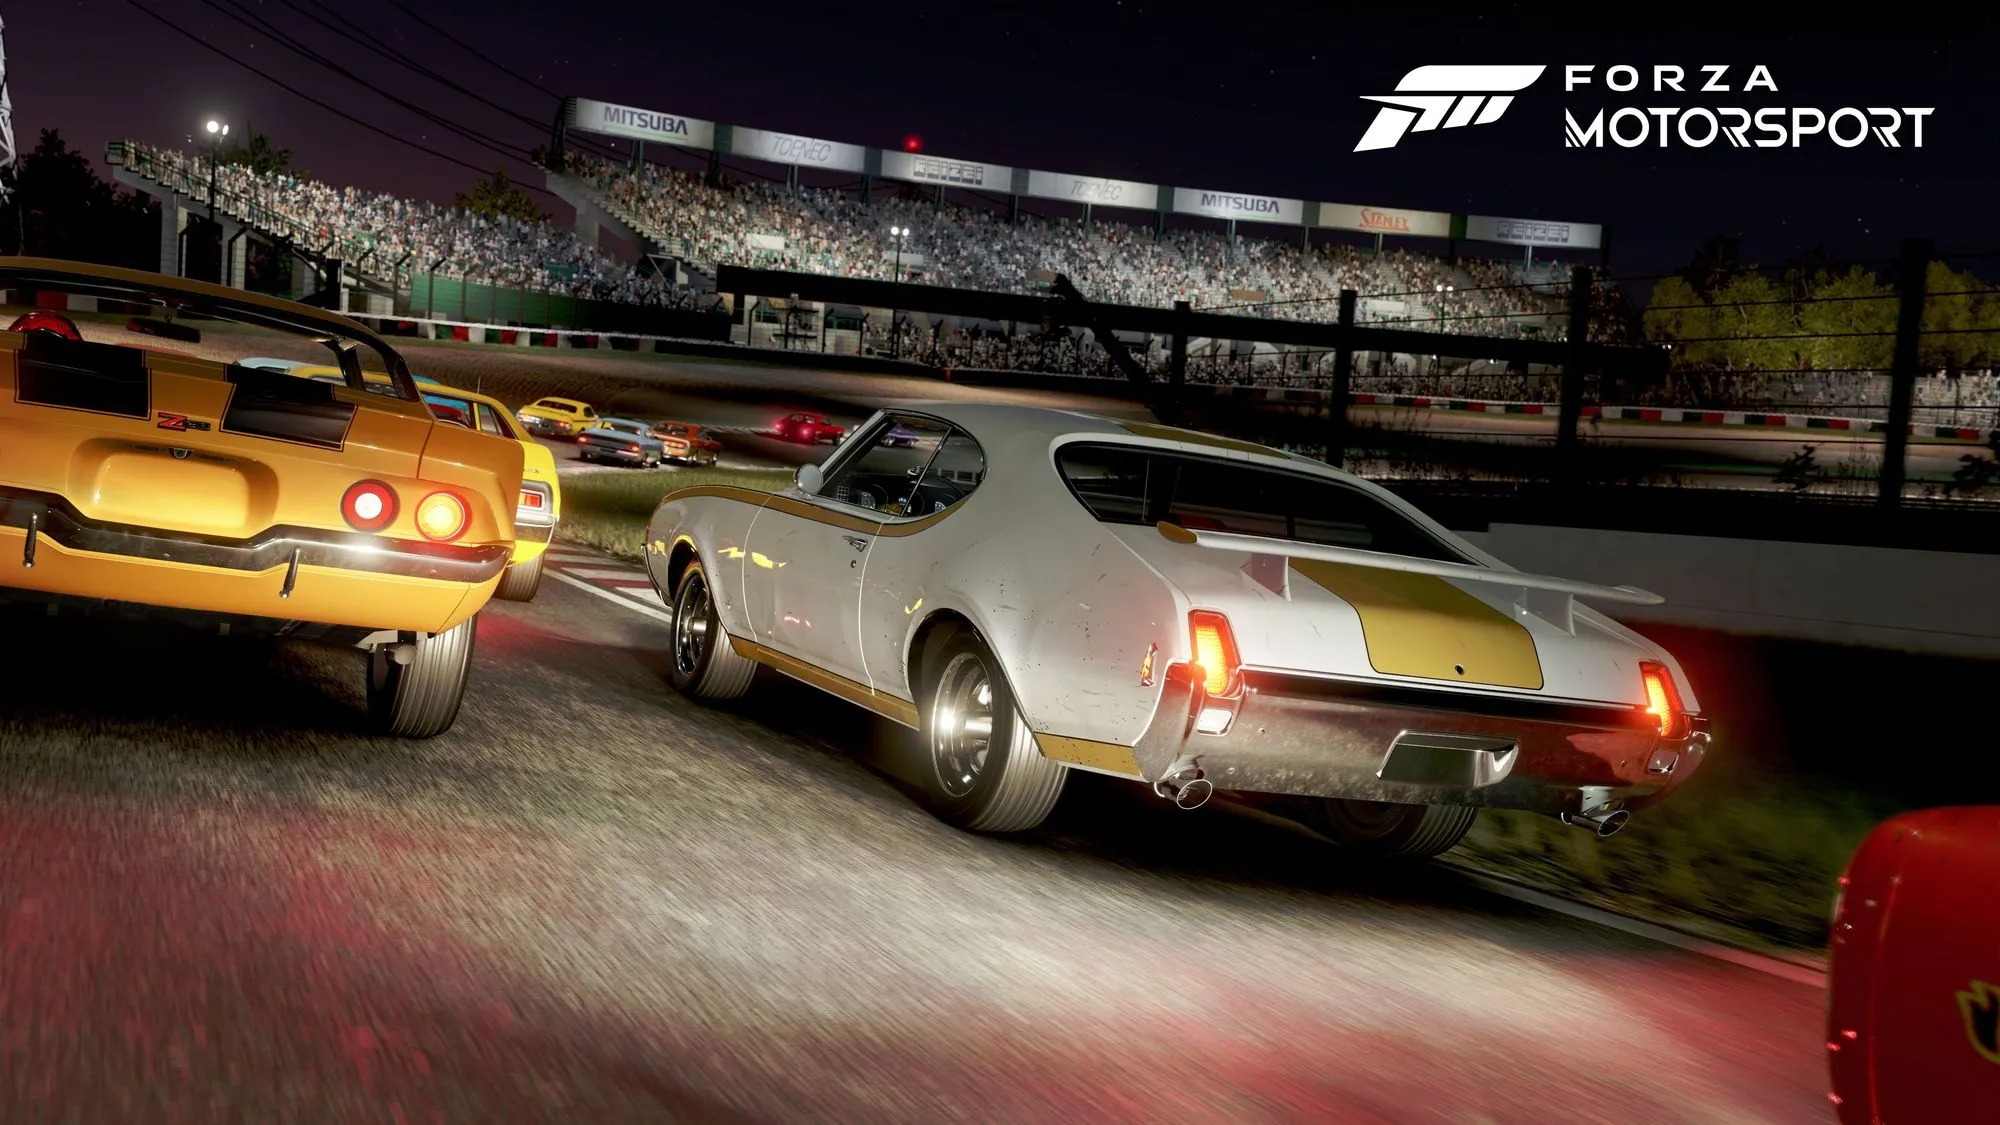 Forza Motorsport Gameplay Comparison Clip Showcases Impressive Visual Improvements Over Forza Motorsport 7